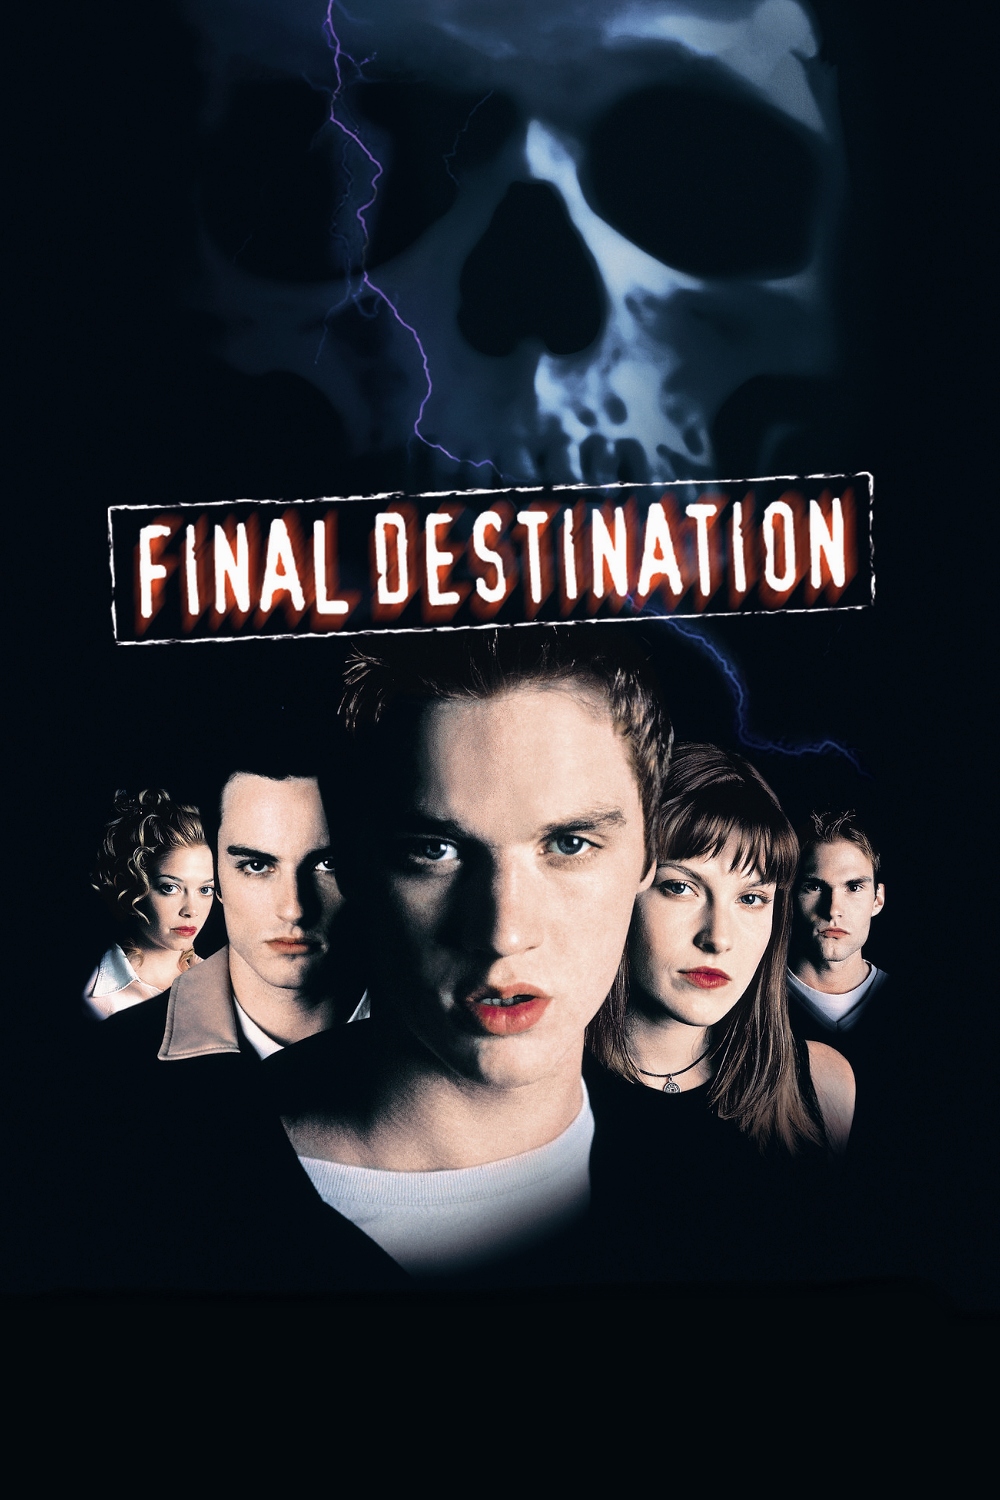 final destination 5 free download